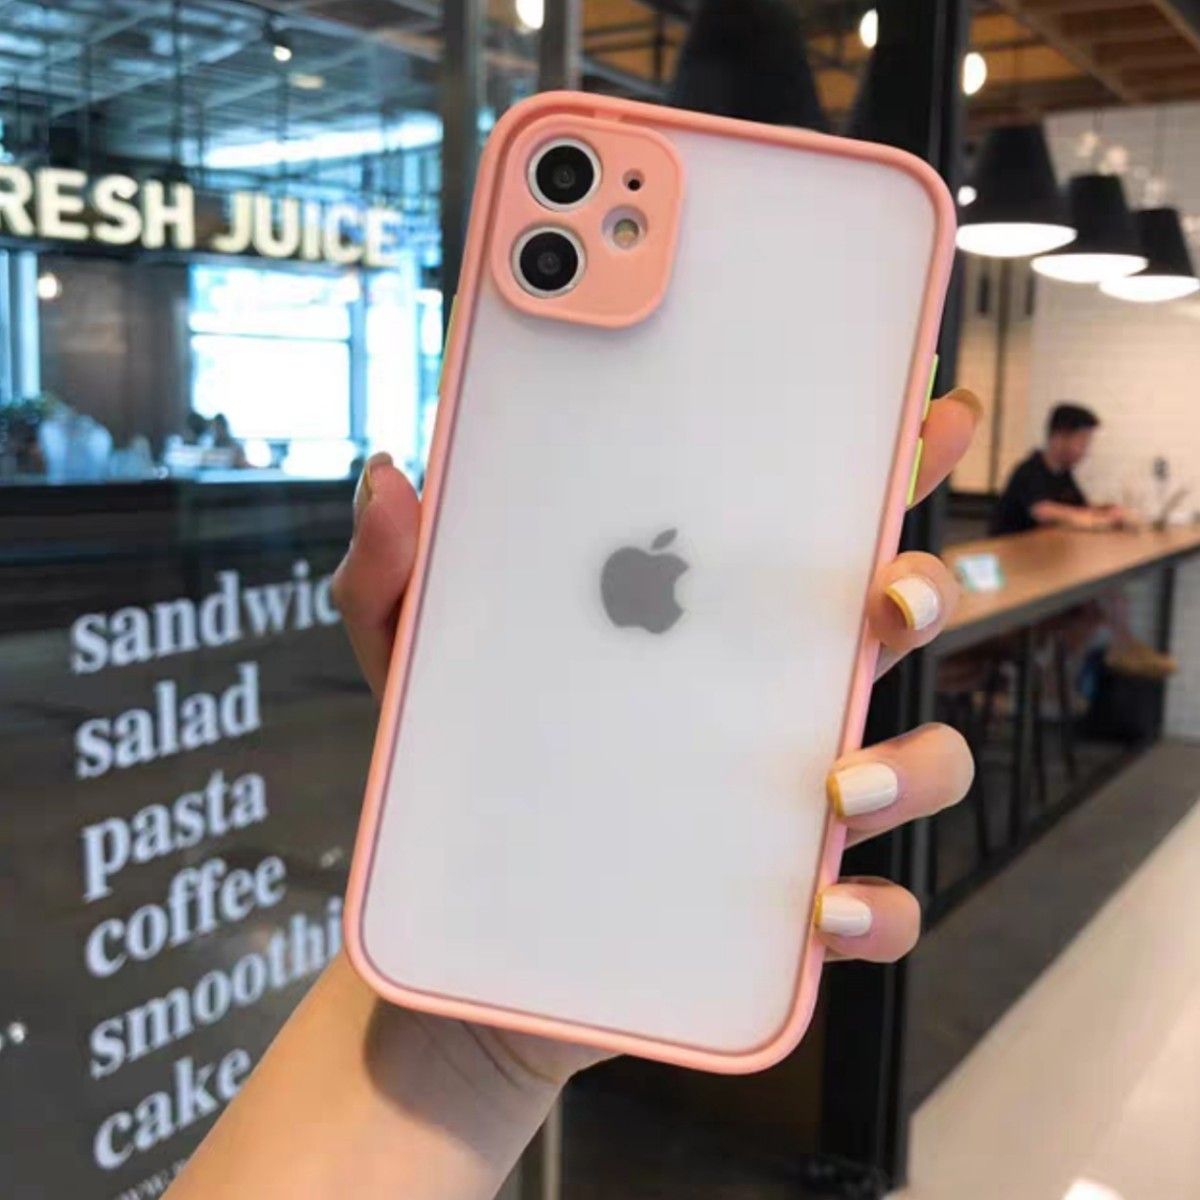 iPhone15pro ケース カバー TPU ピンク 半透明 おしゃれ くすみカラー 韓国 新品